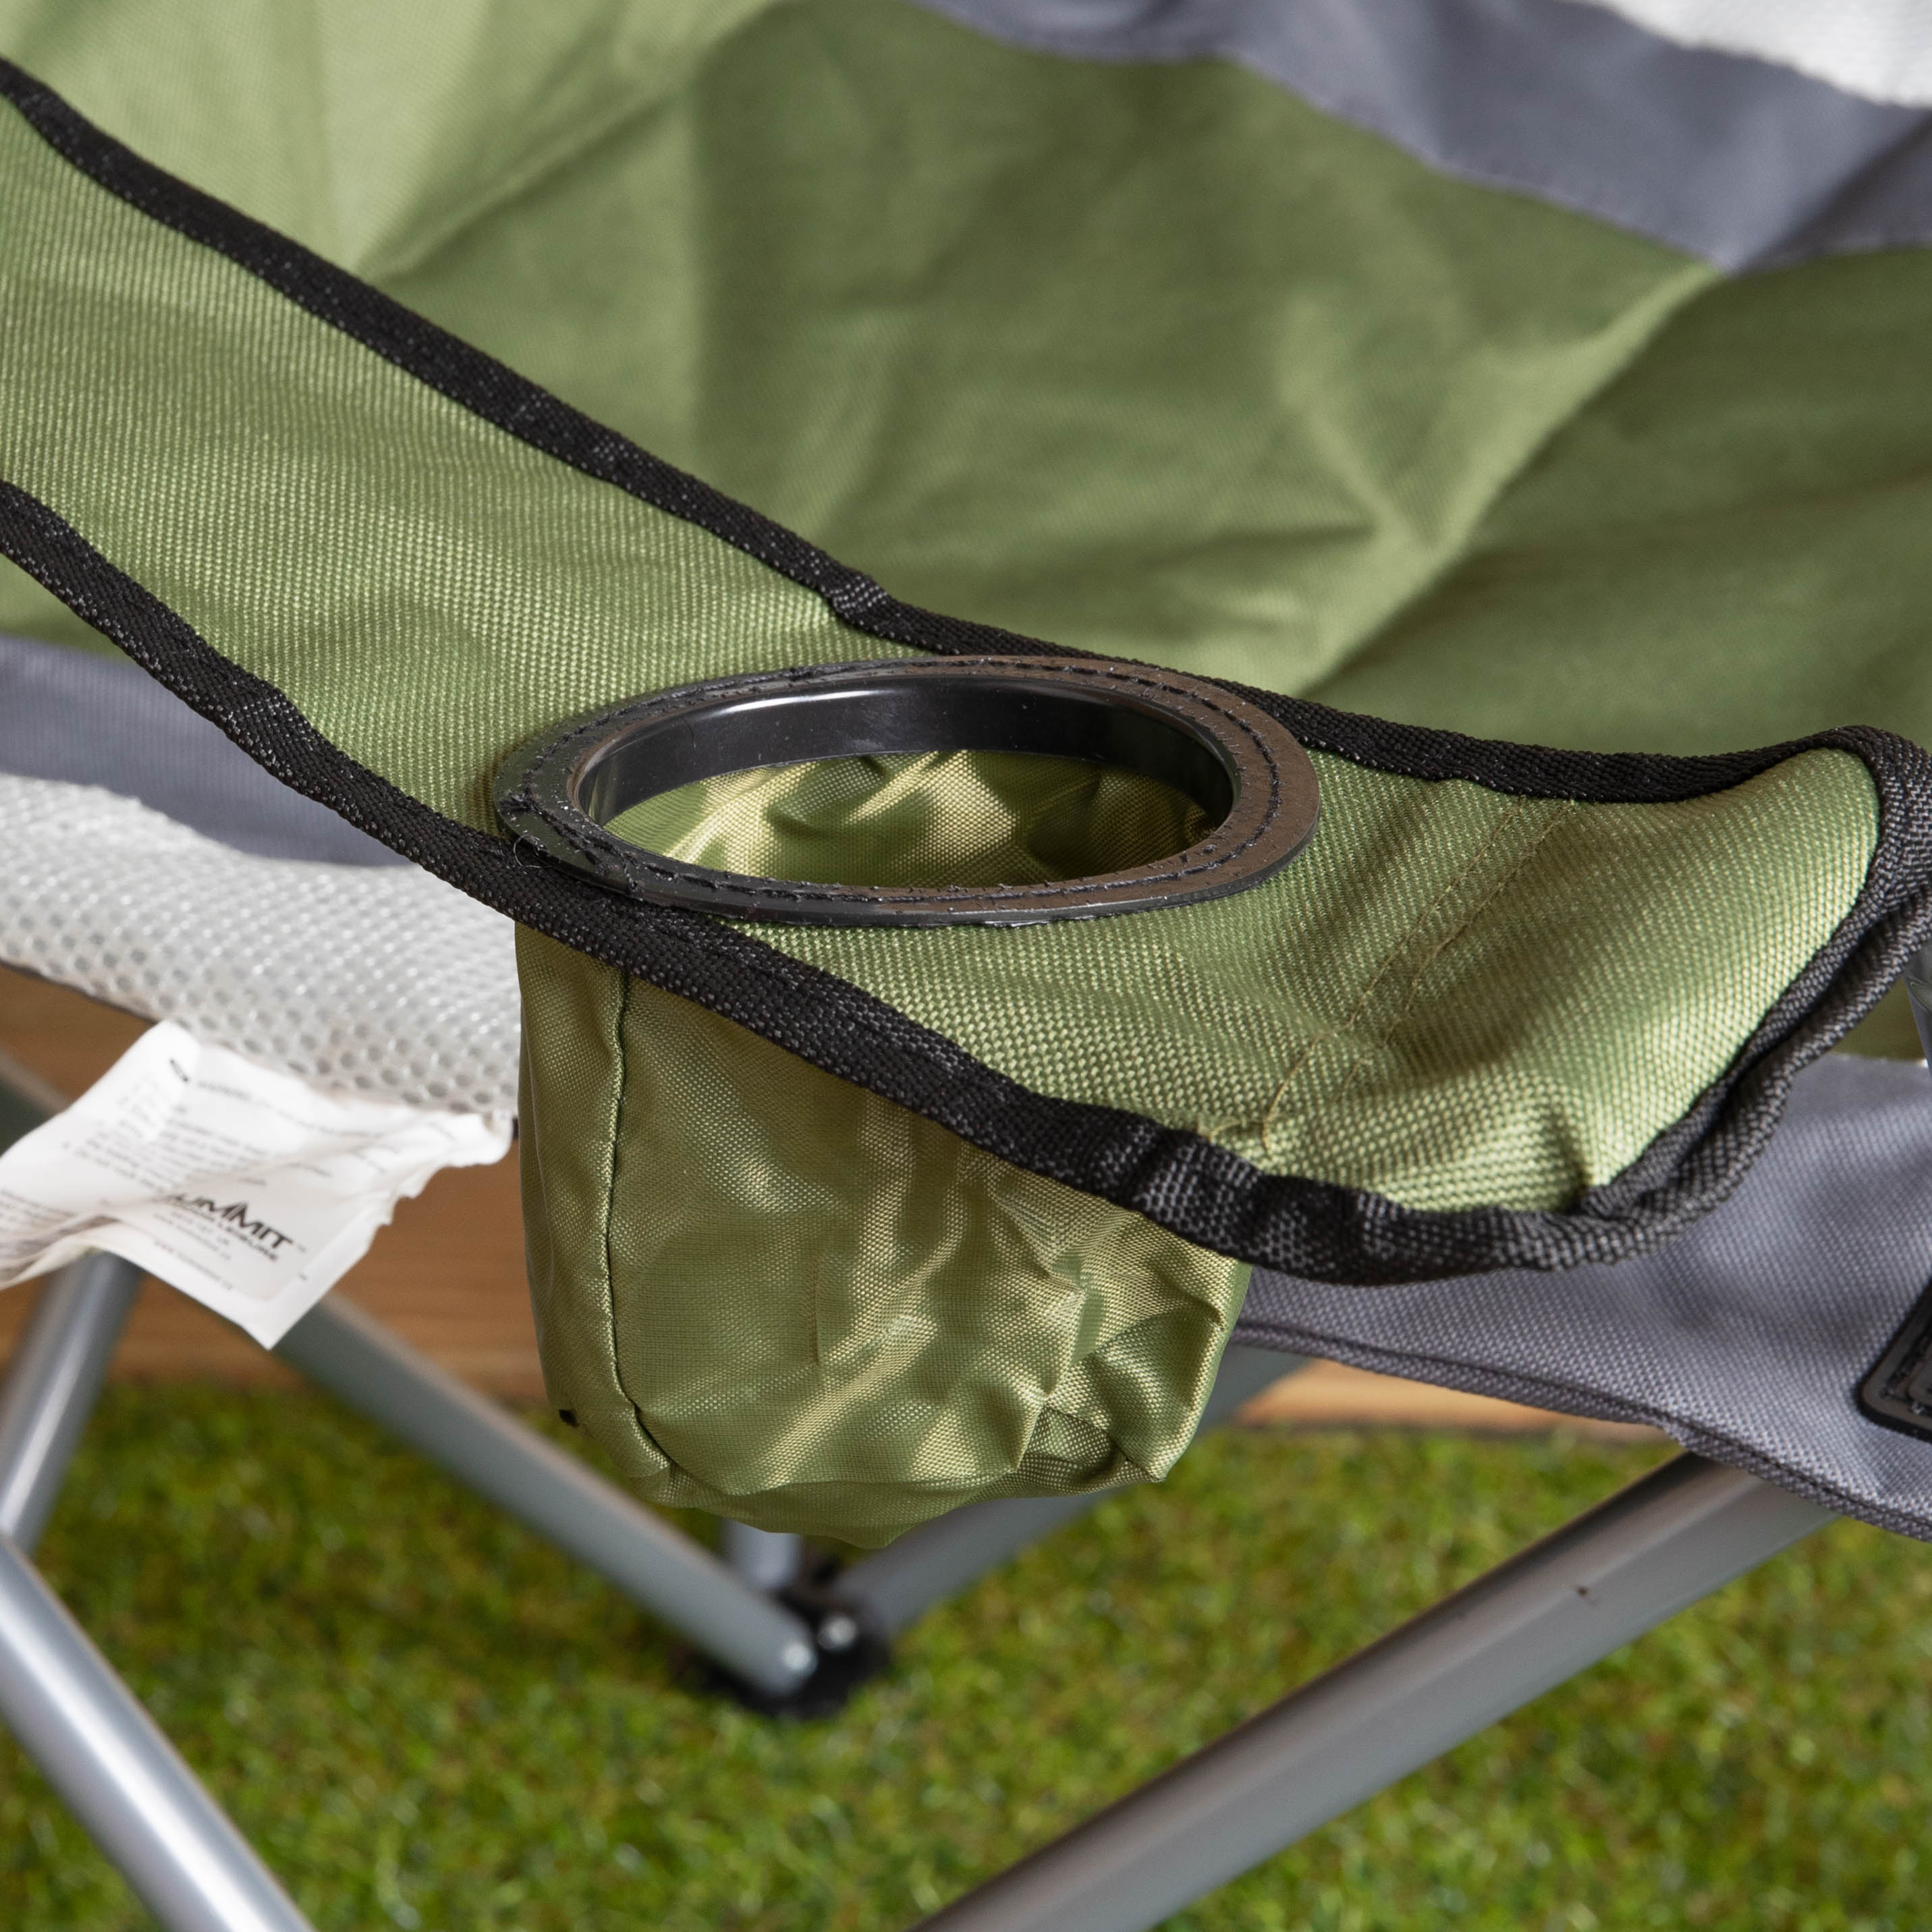 Berkley Folding Lightweight Padded High Back Relaxer Camping Chair in Forest Green